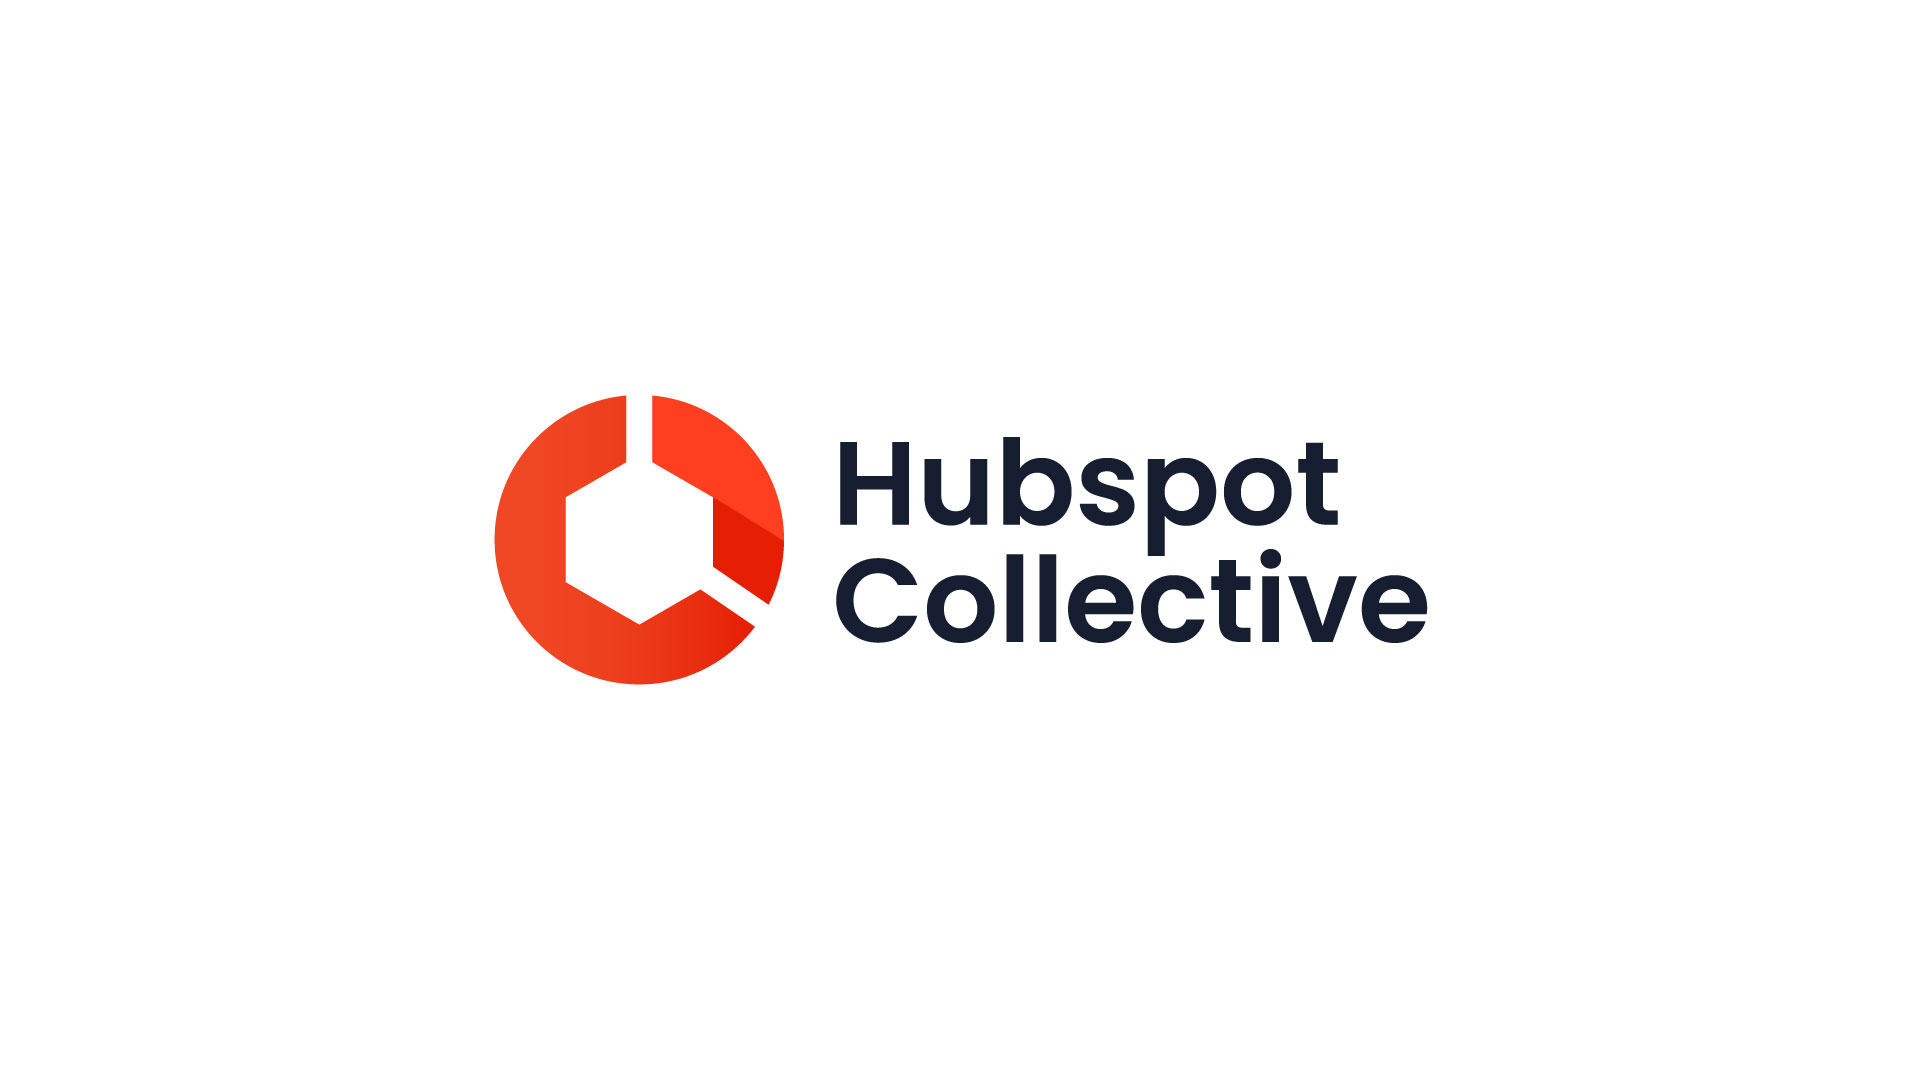 HubSpot Collective